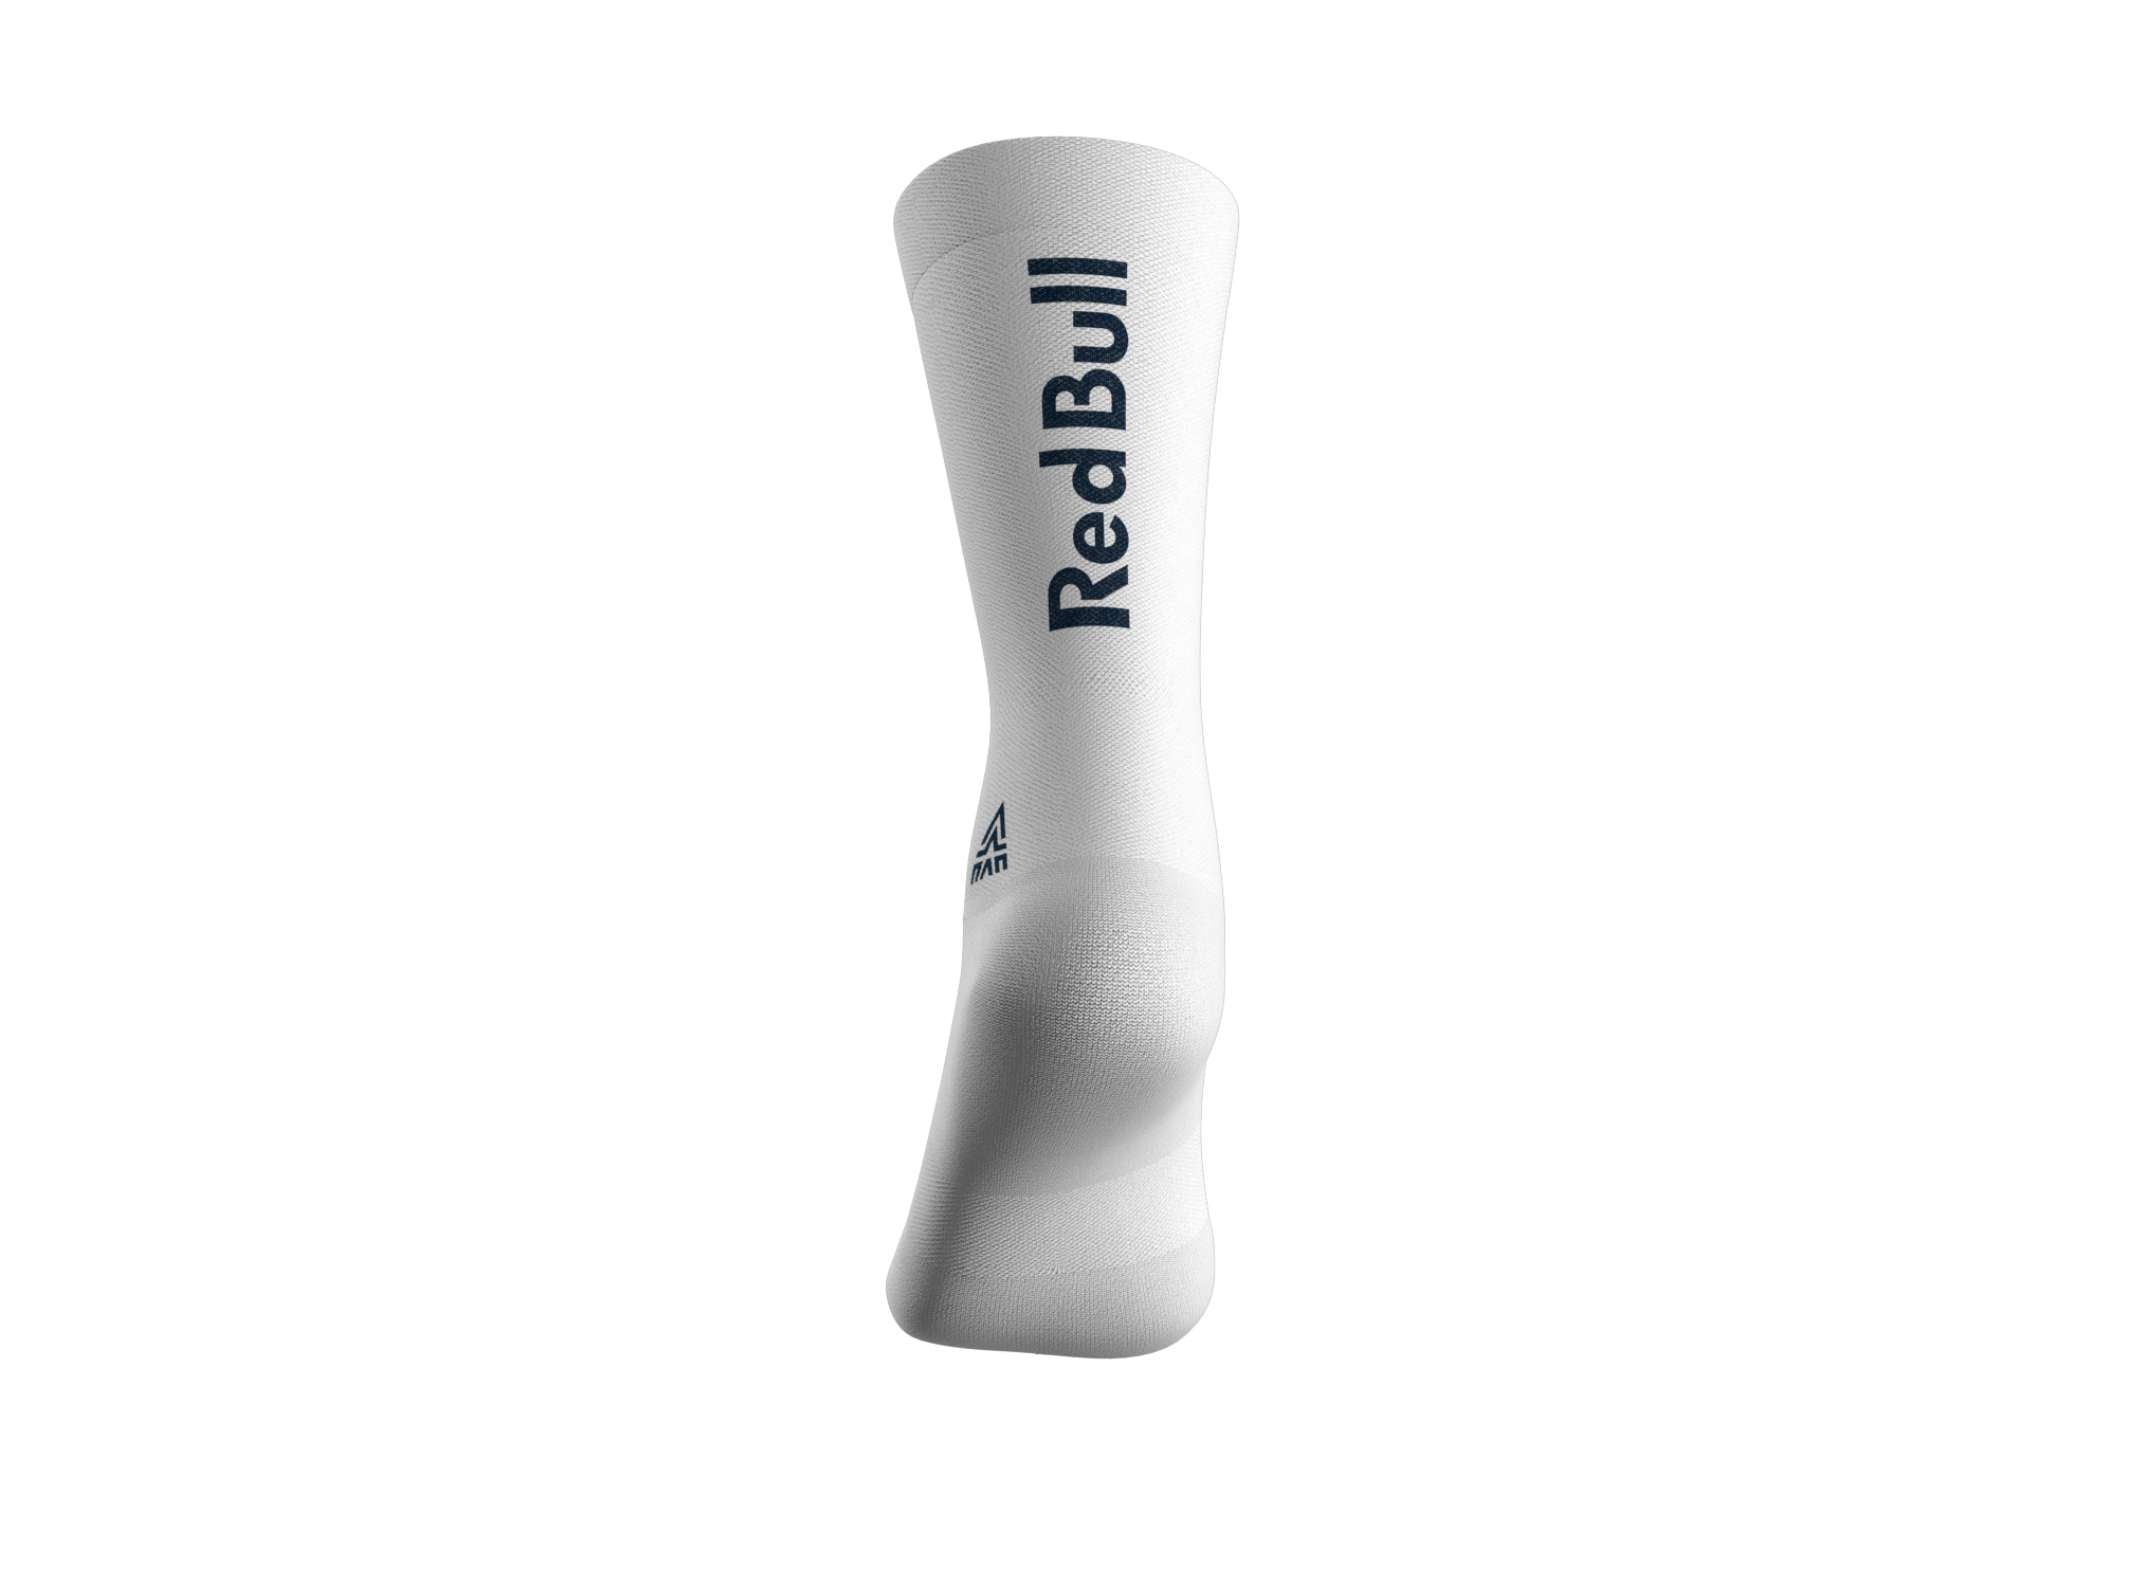 ICHNITE Socks - RED BULL / WHITE / BLUE | ADICTA LAB Apparel